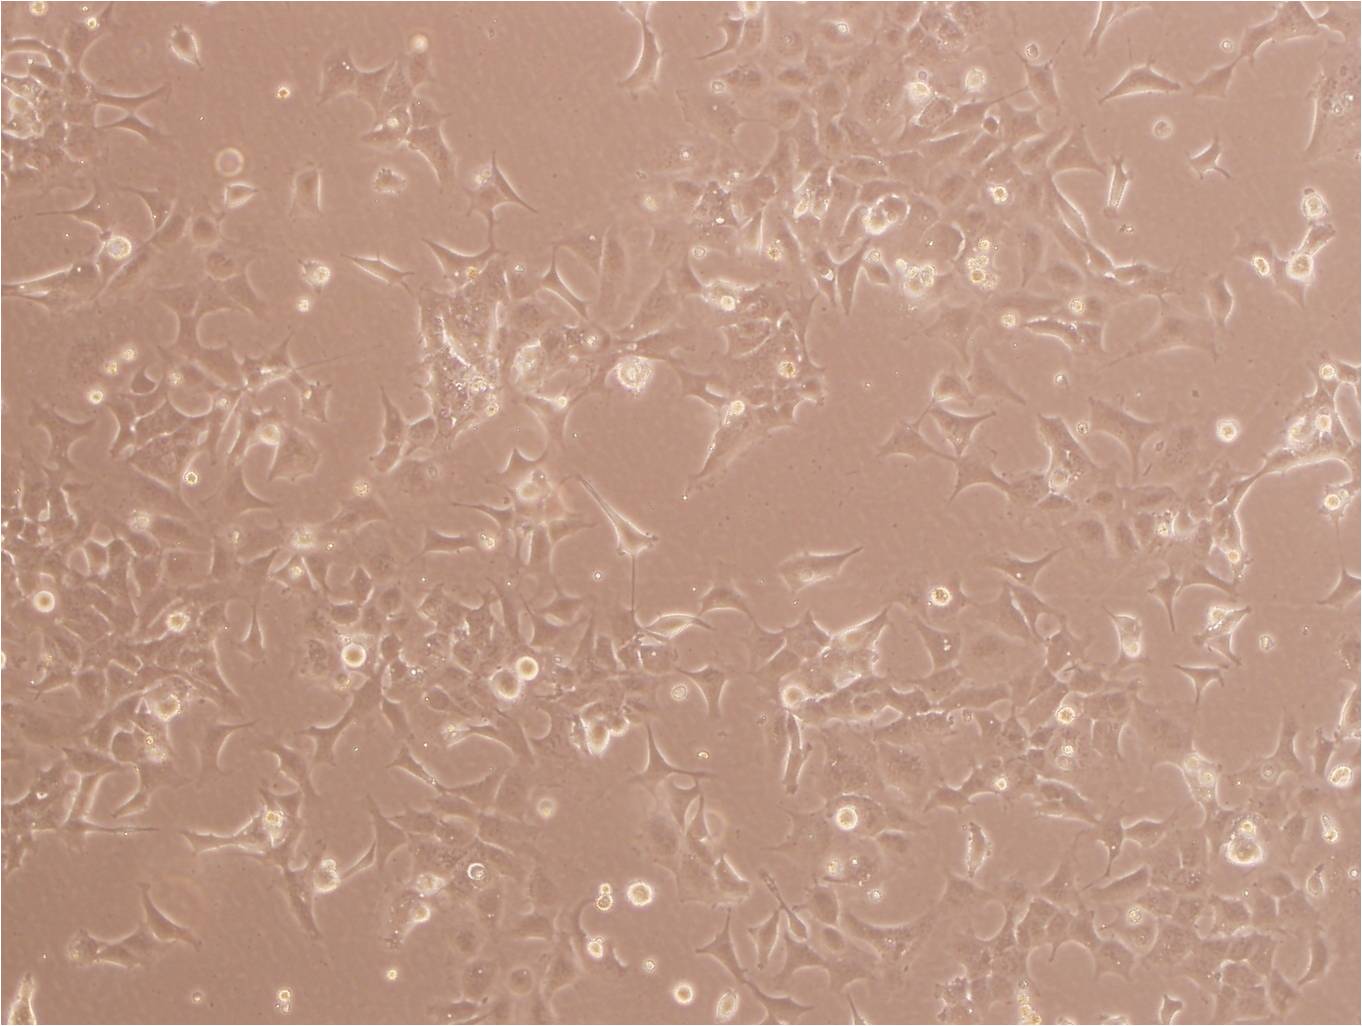 HCT 15 Cells|人结直肠腺癌可传代细胞系,HCT 15 Cells